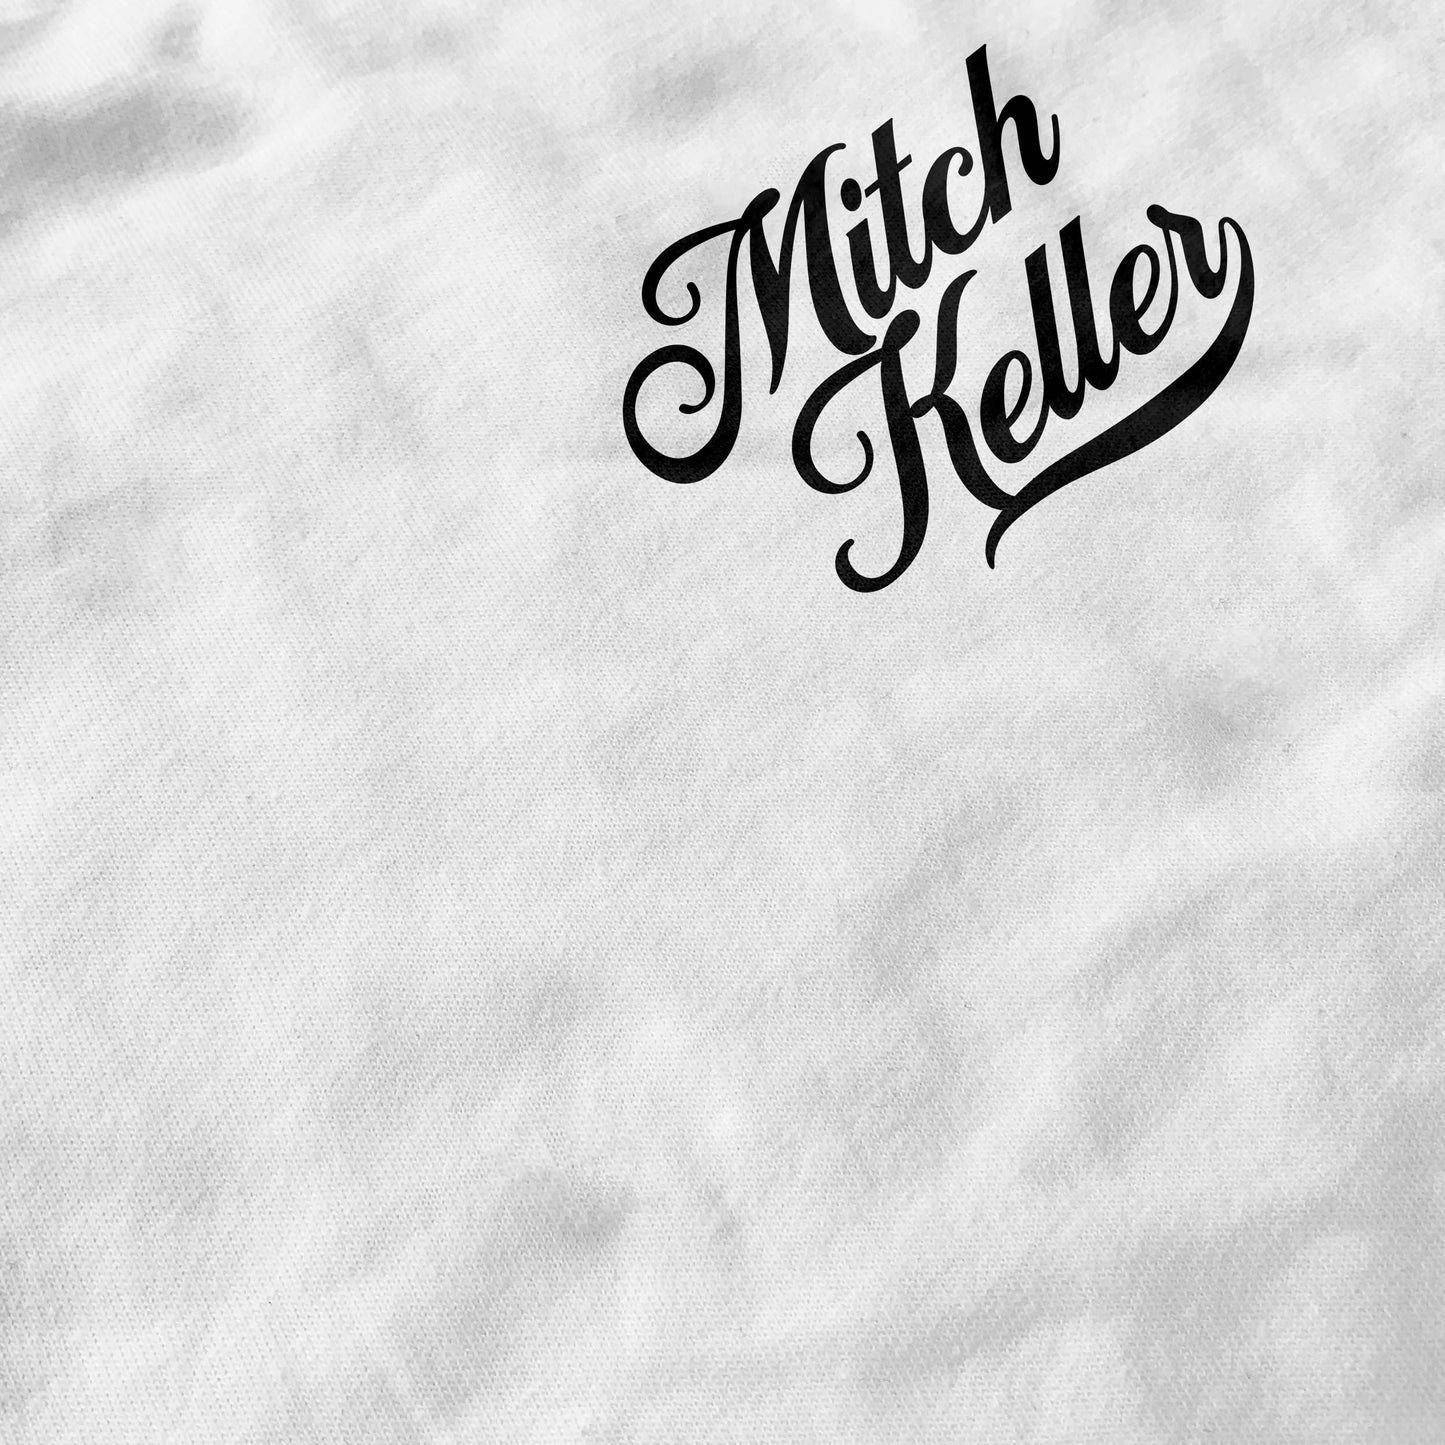 Mitch Keller Vintage Shirt